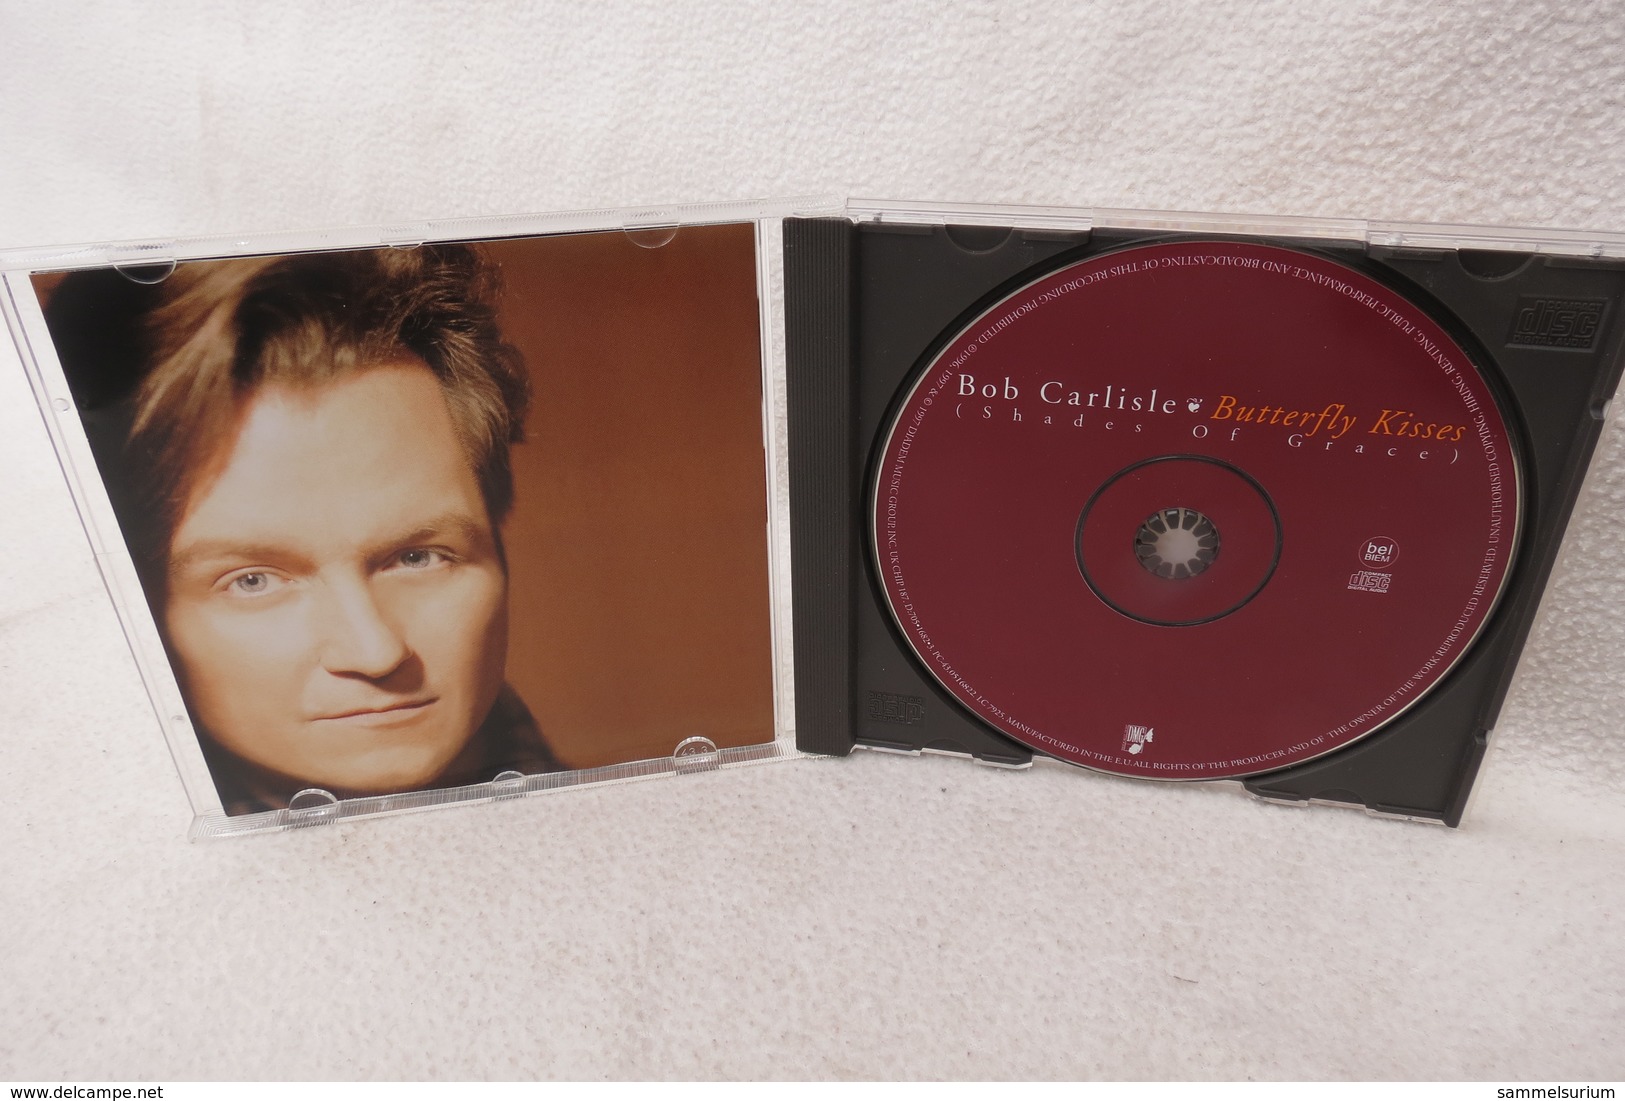 CD "Bob Carlisle" Butterfly Kisses (Shades Of Grace) - Canciones Religiosas Y  Gospels